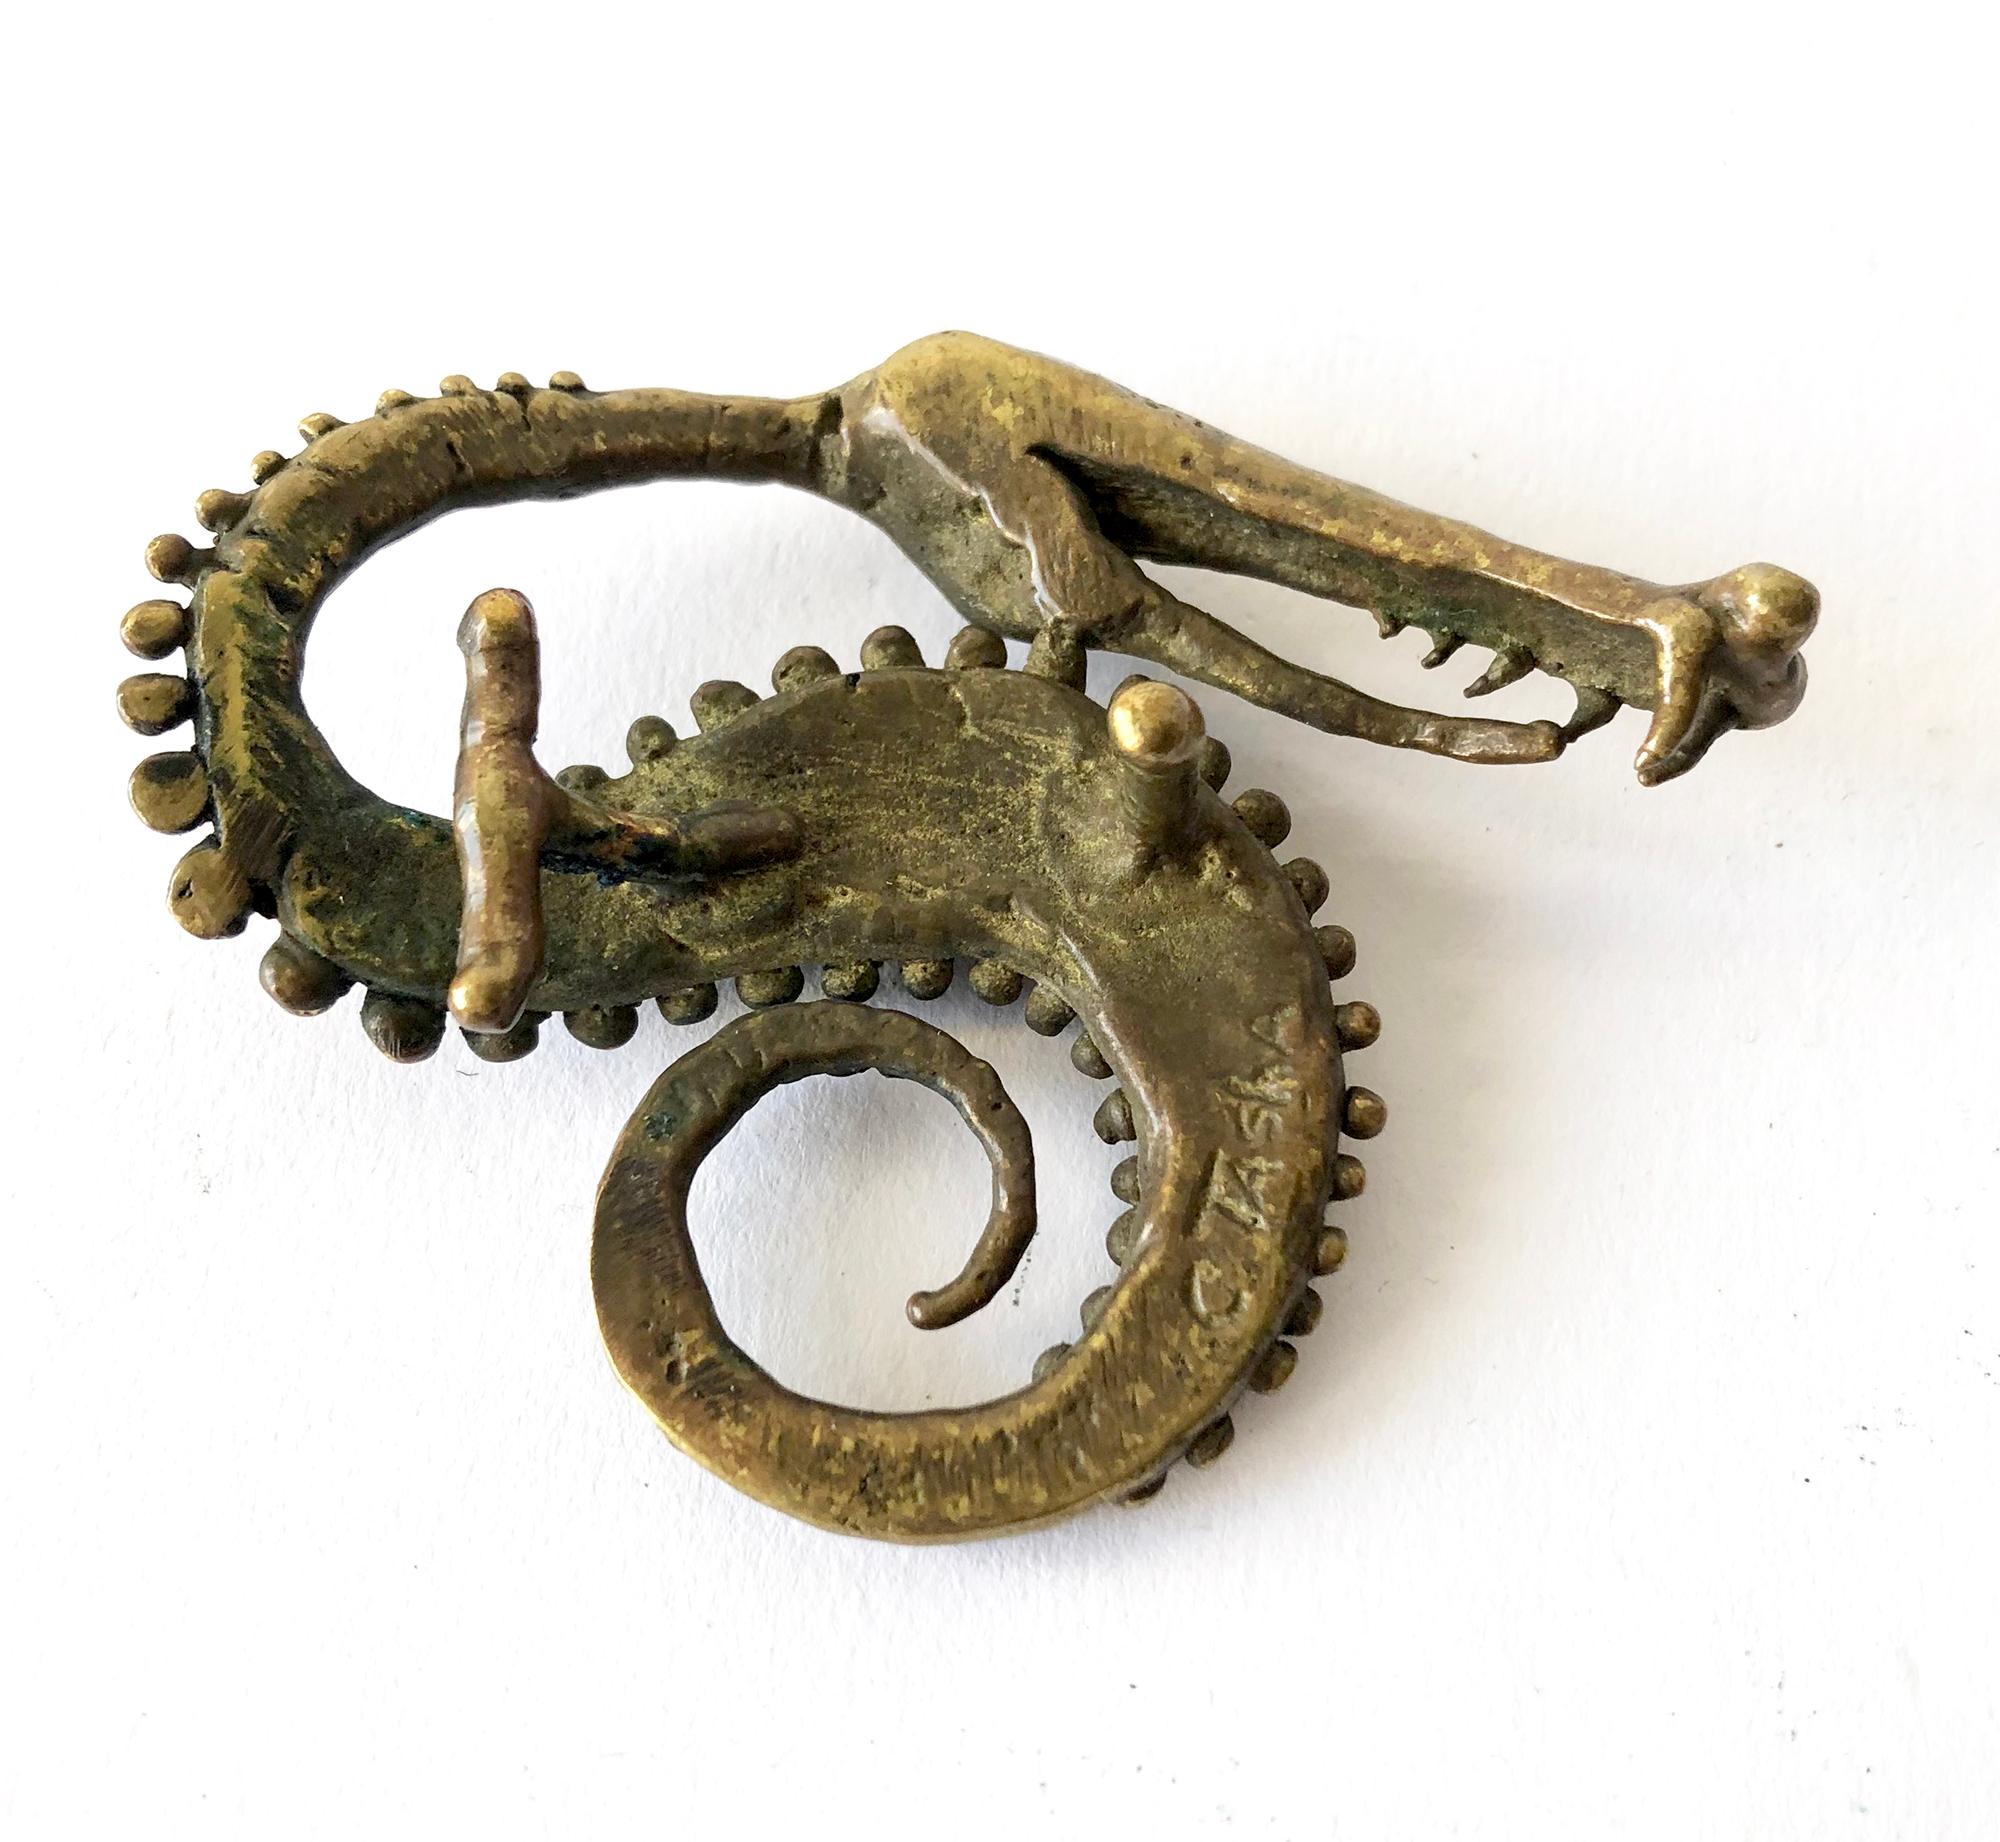 Bronze Serpent belt buckle created by Carl Tasha, circa 1960's or 1970's.  Buckle measures 2